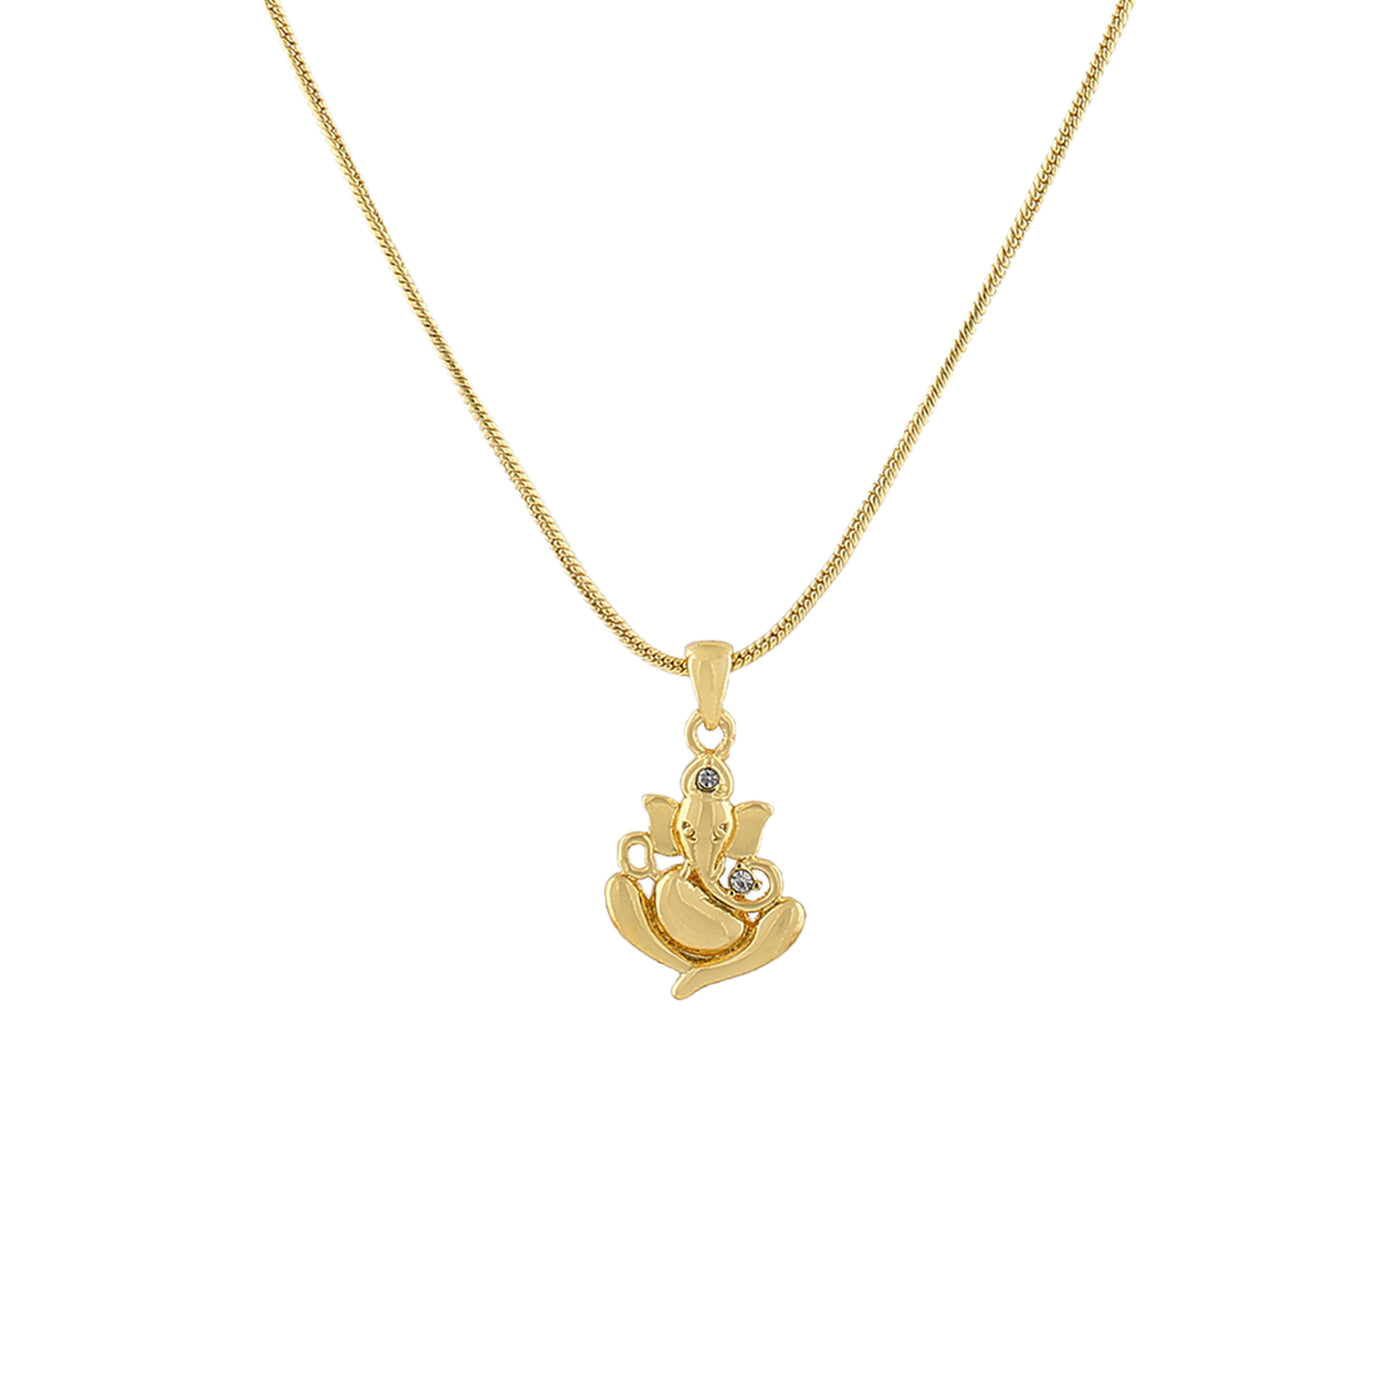 Estele Gold Tone Plated Ganesh Pendant chain